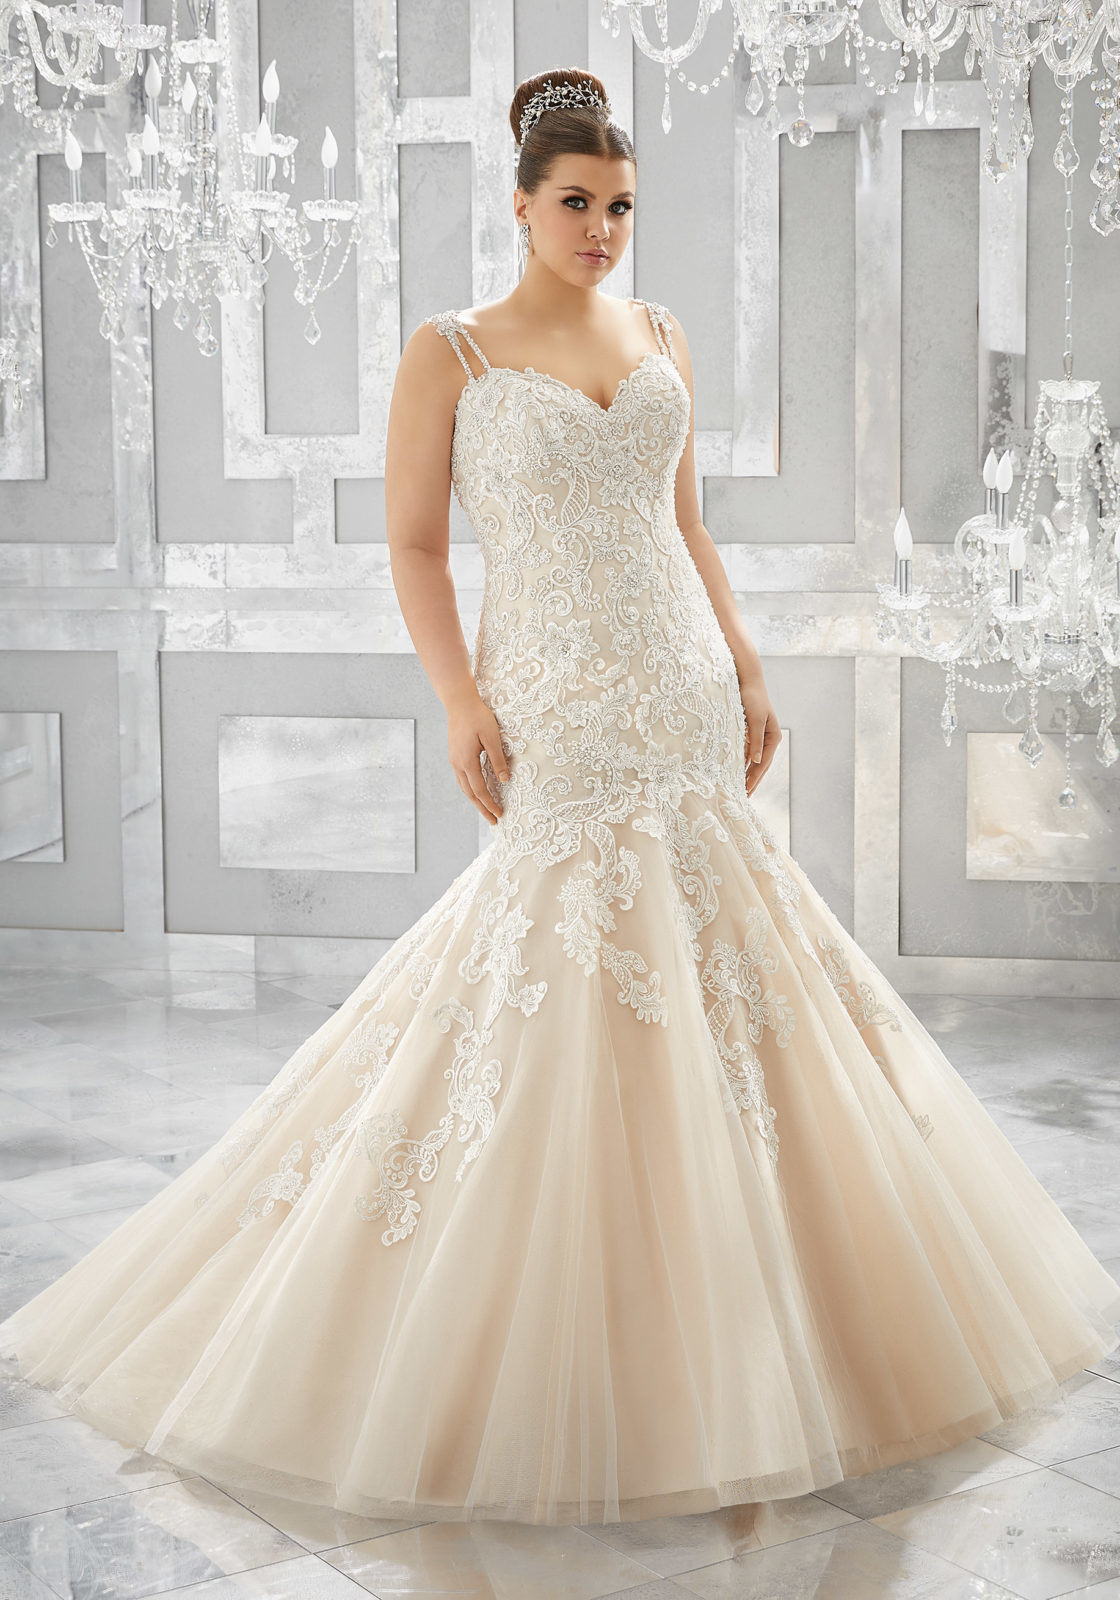 Spaghetti Bridal Dress Lace Appliqued Beaded Mermaid Wedding Gown Lb3221